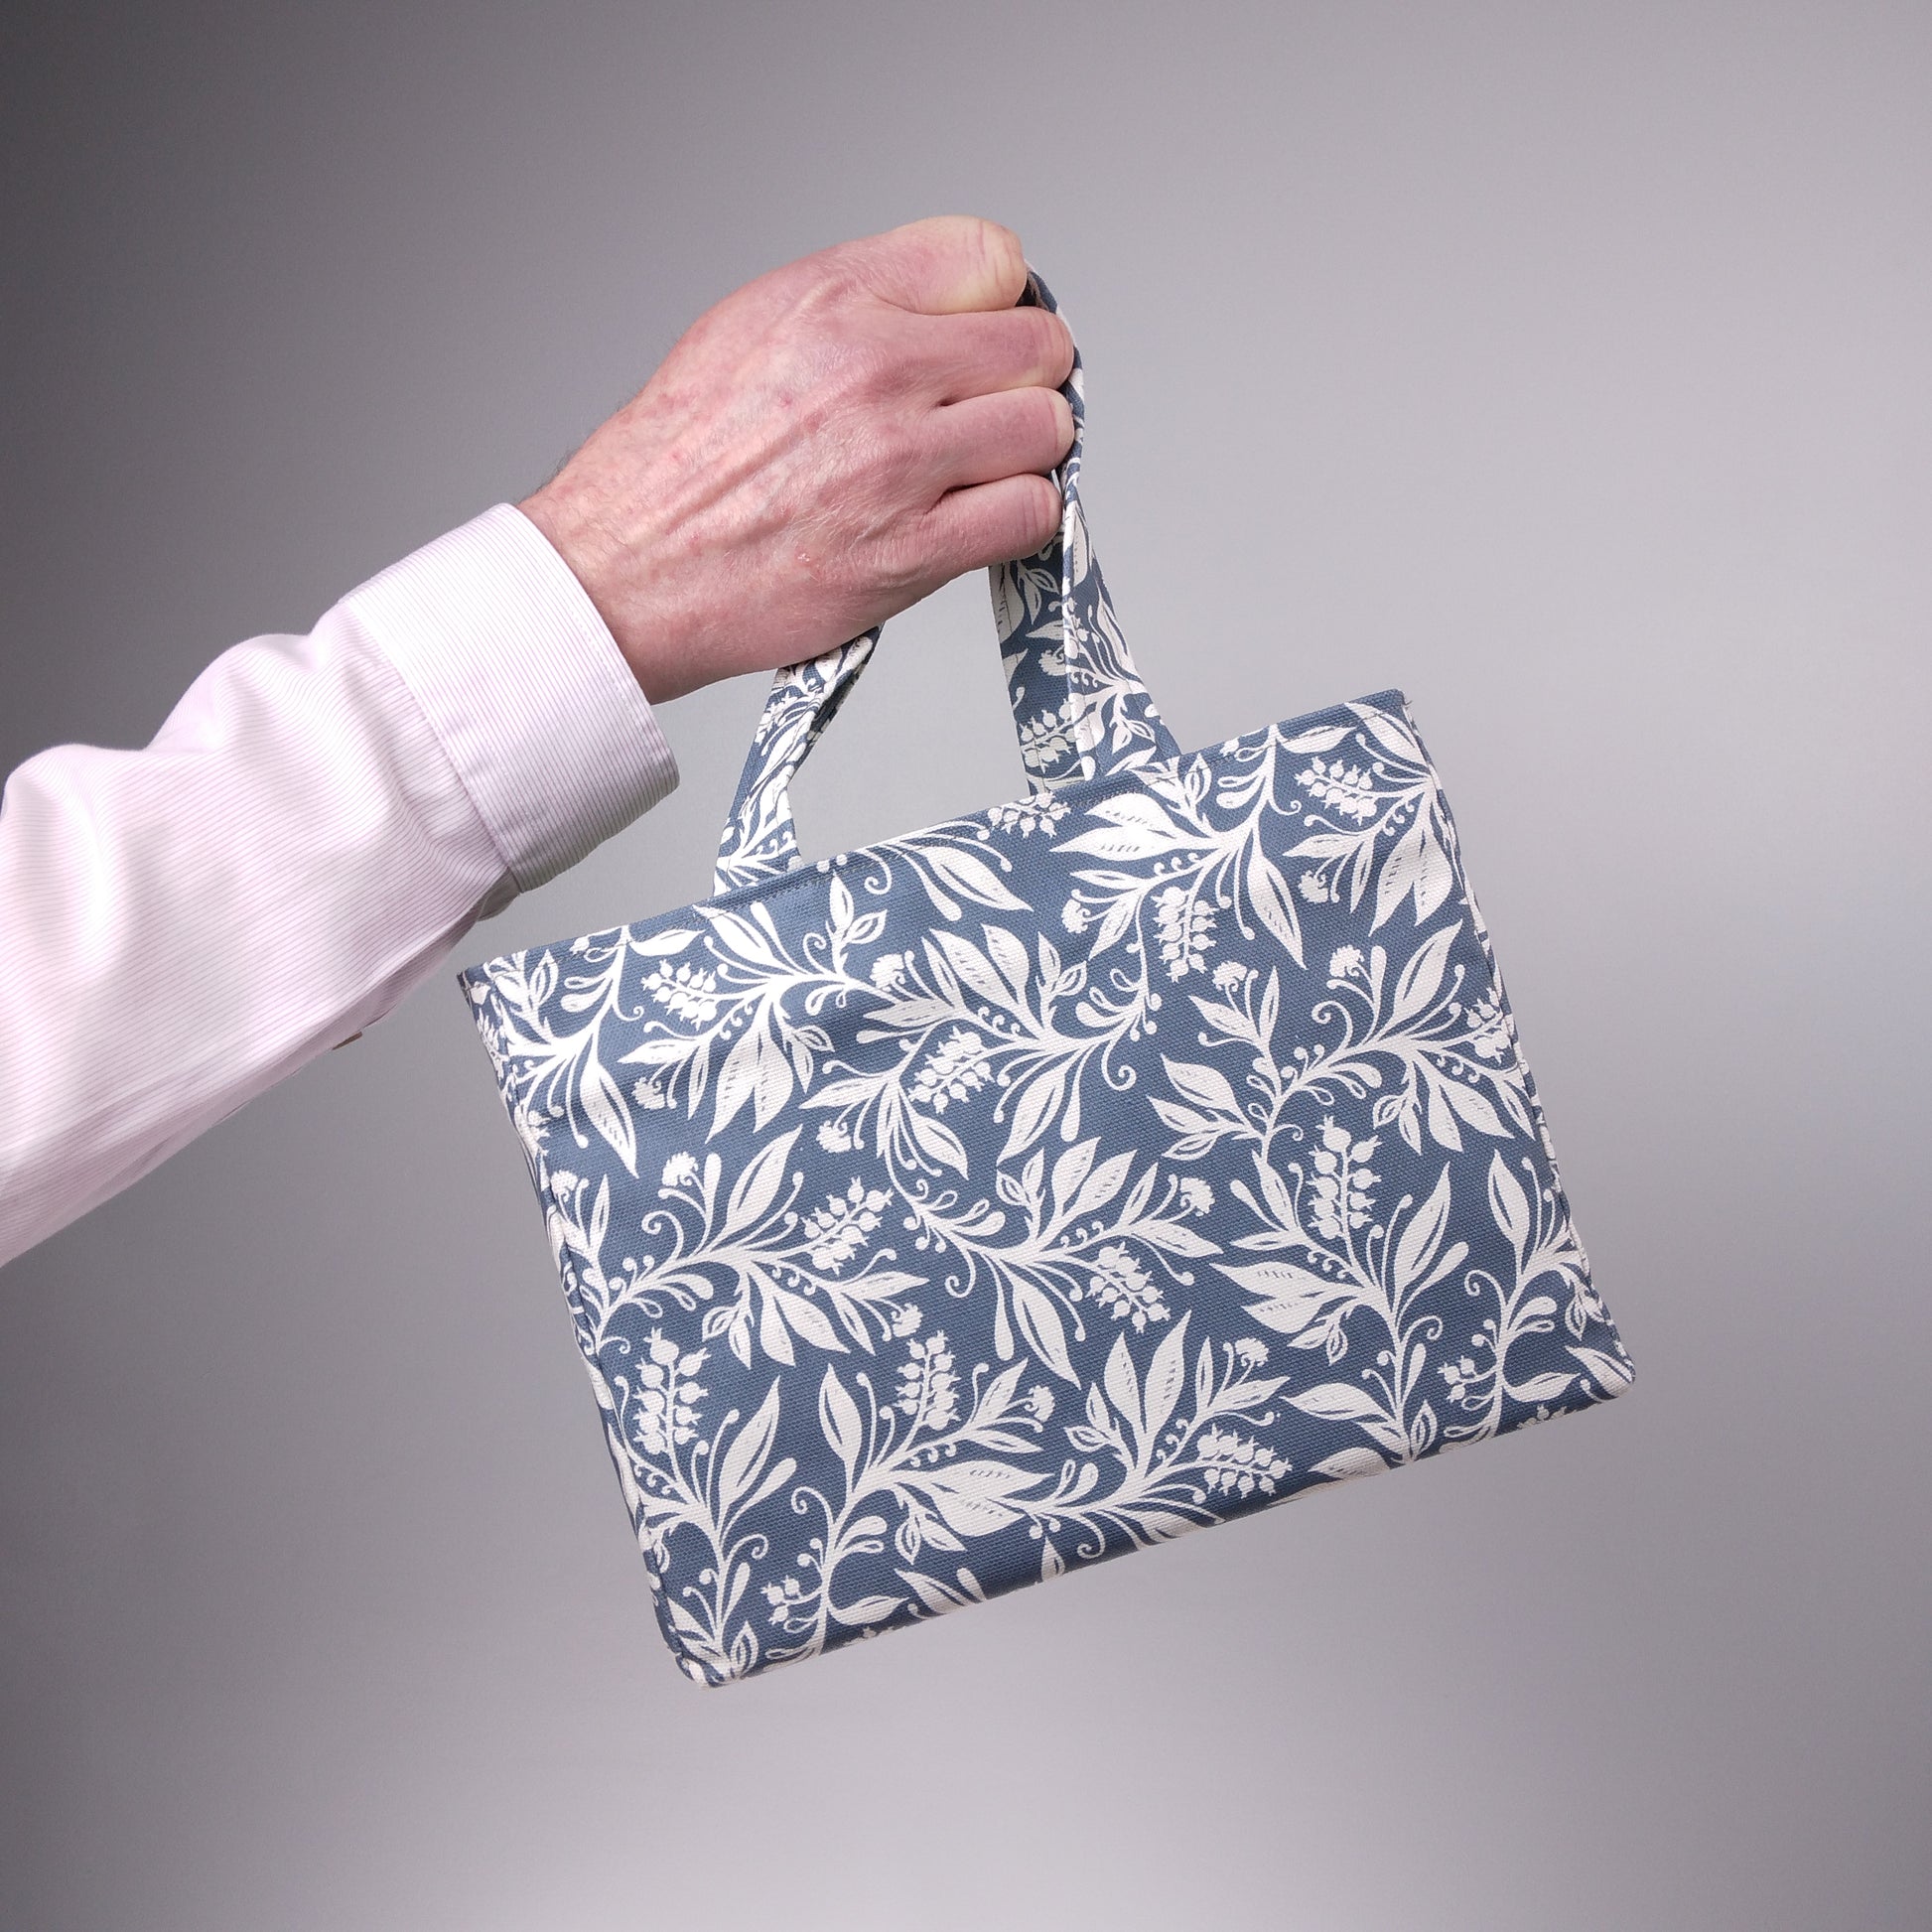 Mini tote bag with white wildflower silhouette design on dark blue background